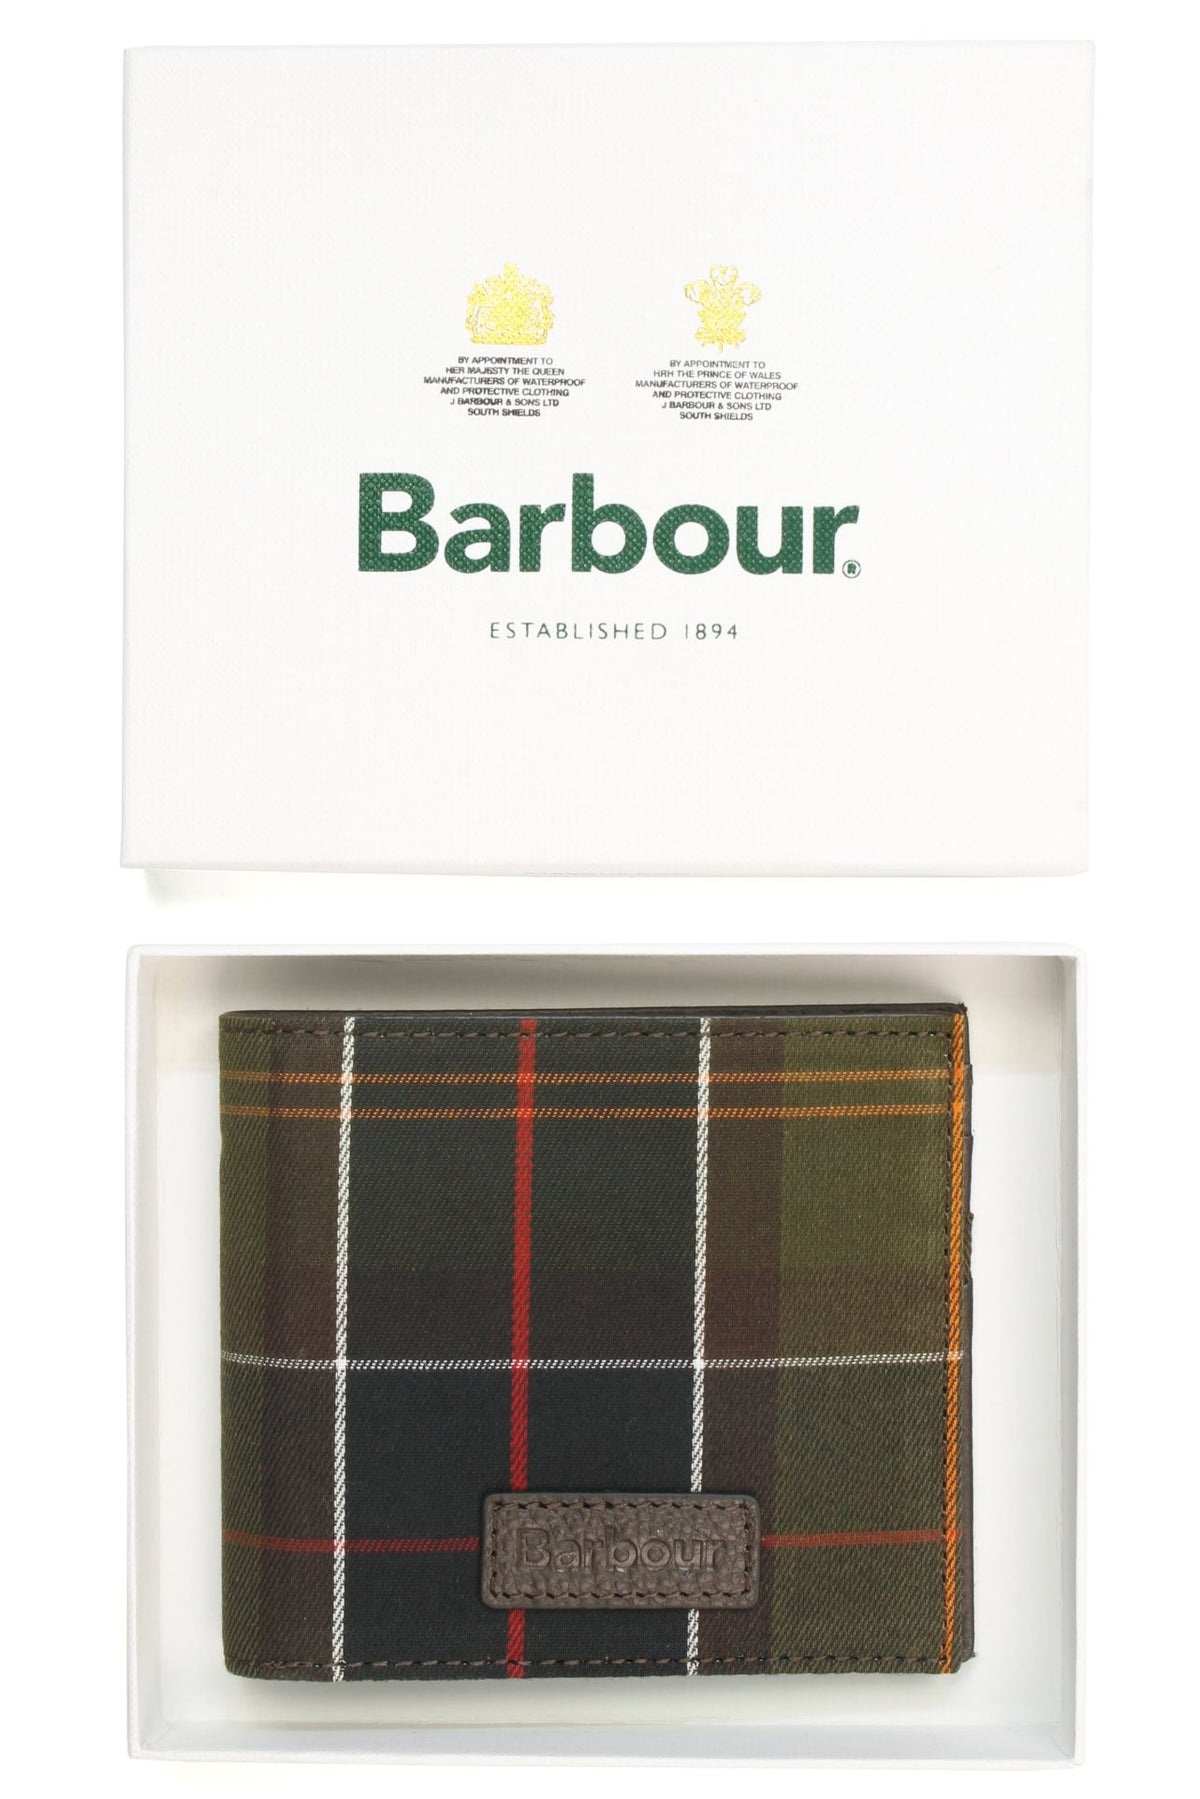 Barbour Mens 'Tartan' Wallet, 01, Mlg0046, Classic Tartan